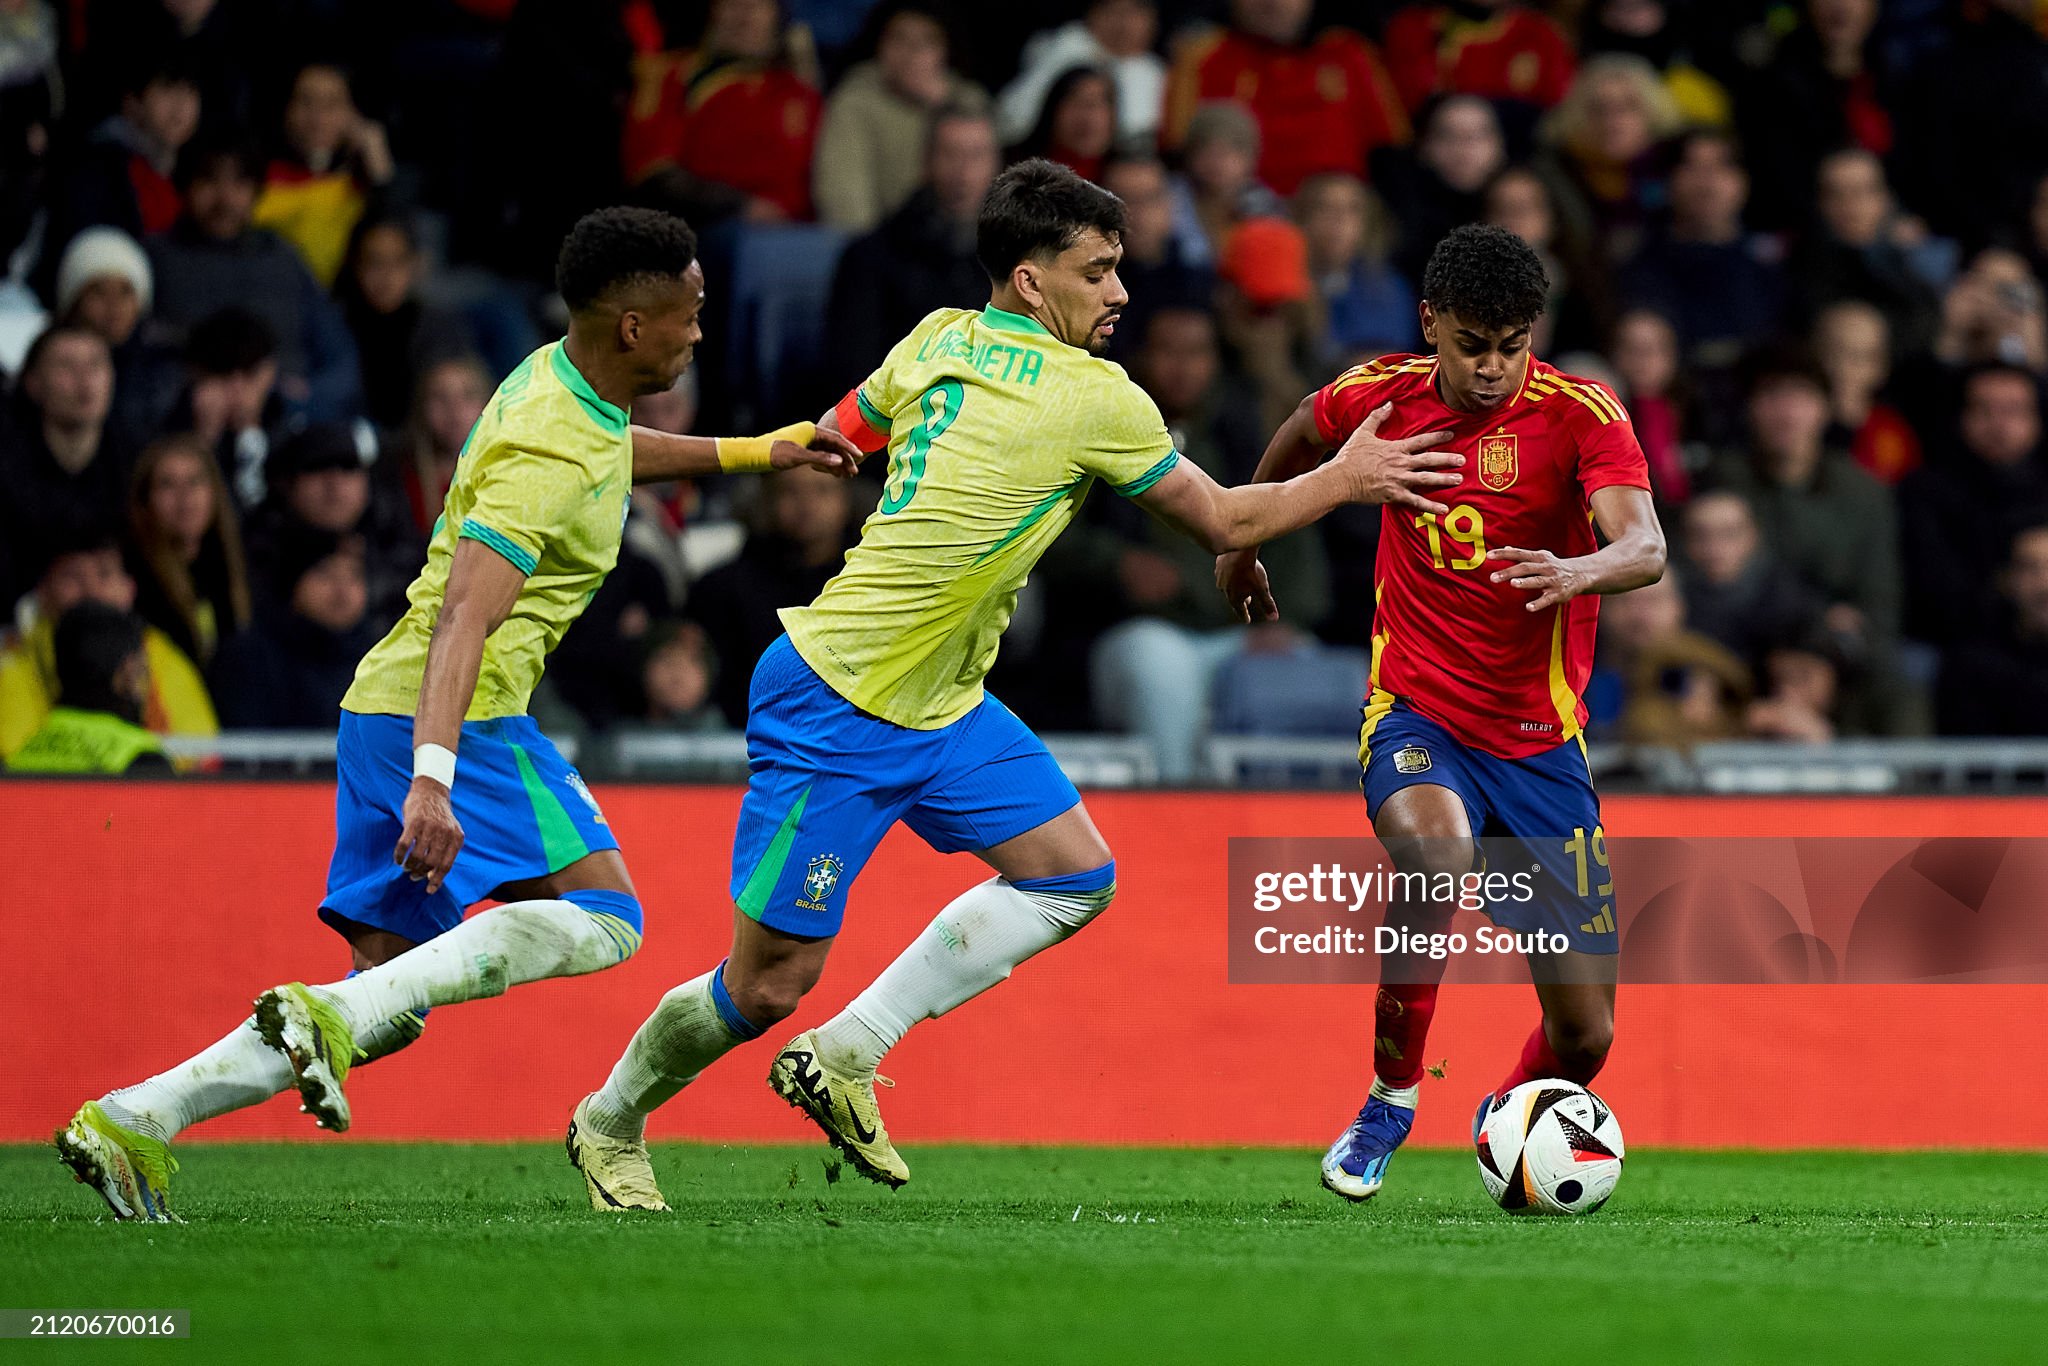 Lamine Yamal dribbles past a defender during Spain's match vs. Brazil